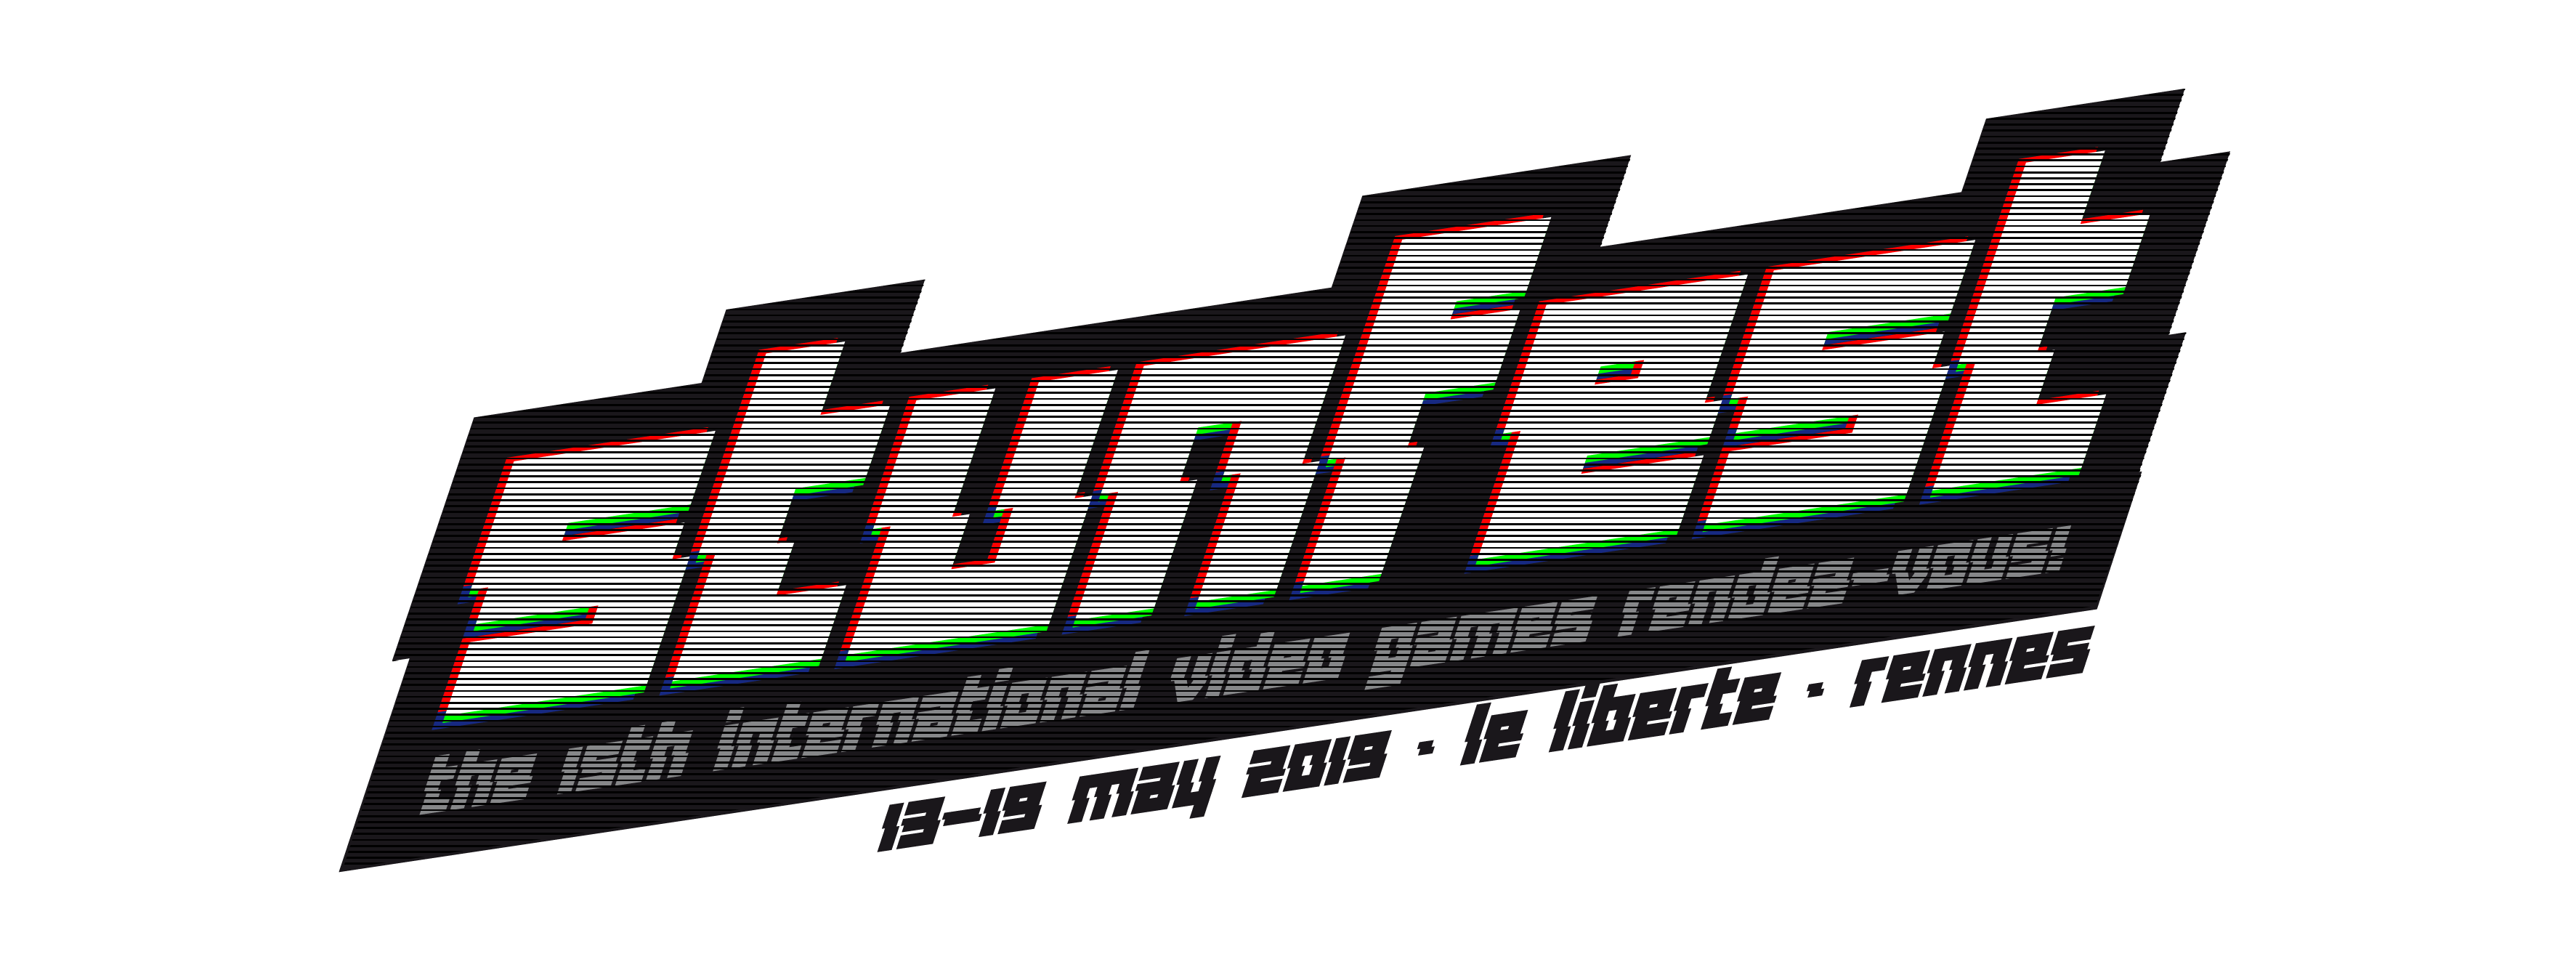 Stunfest 2019 logo